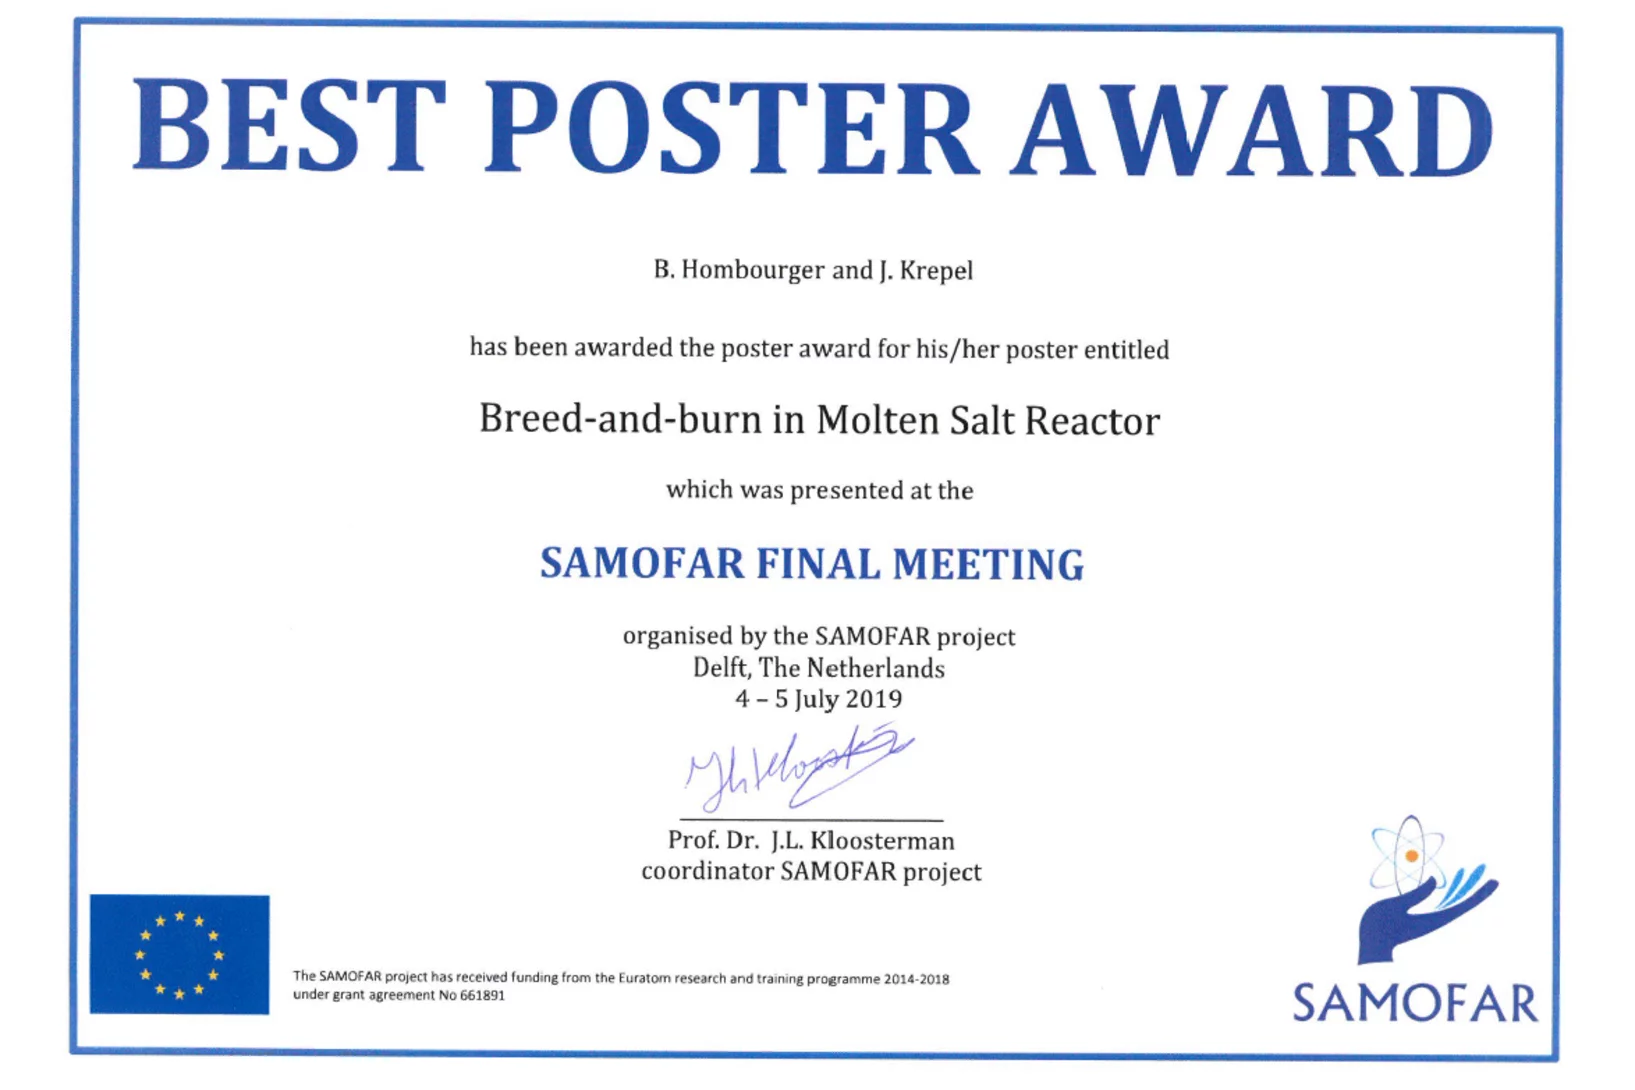 best_poster_award